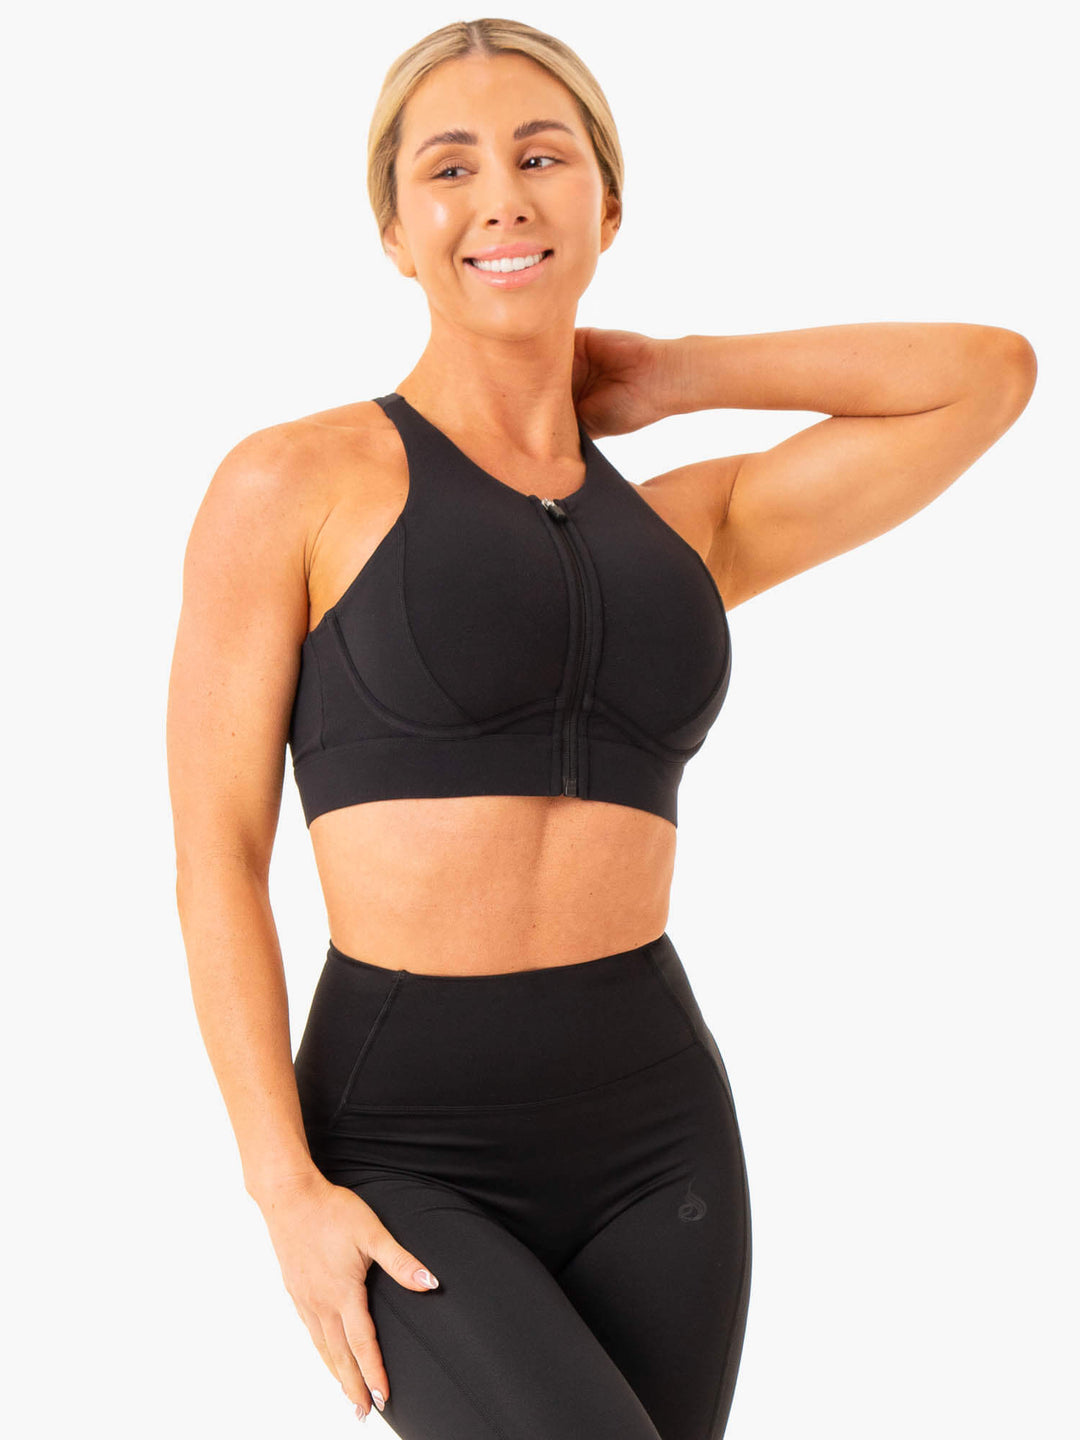 Women's high impact sports bra - Activewear manufacturer